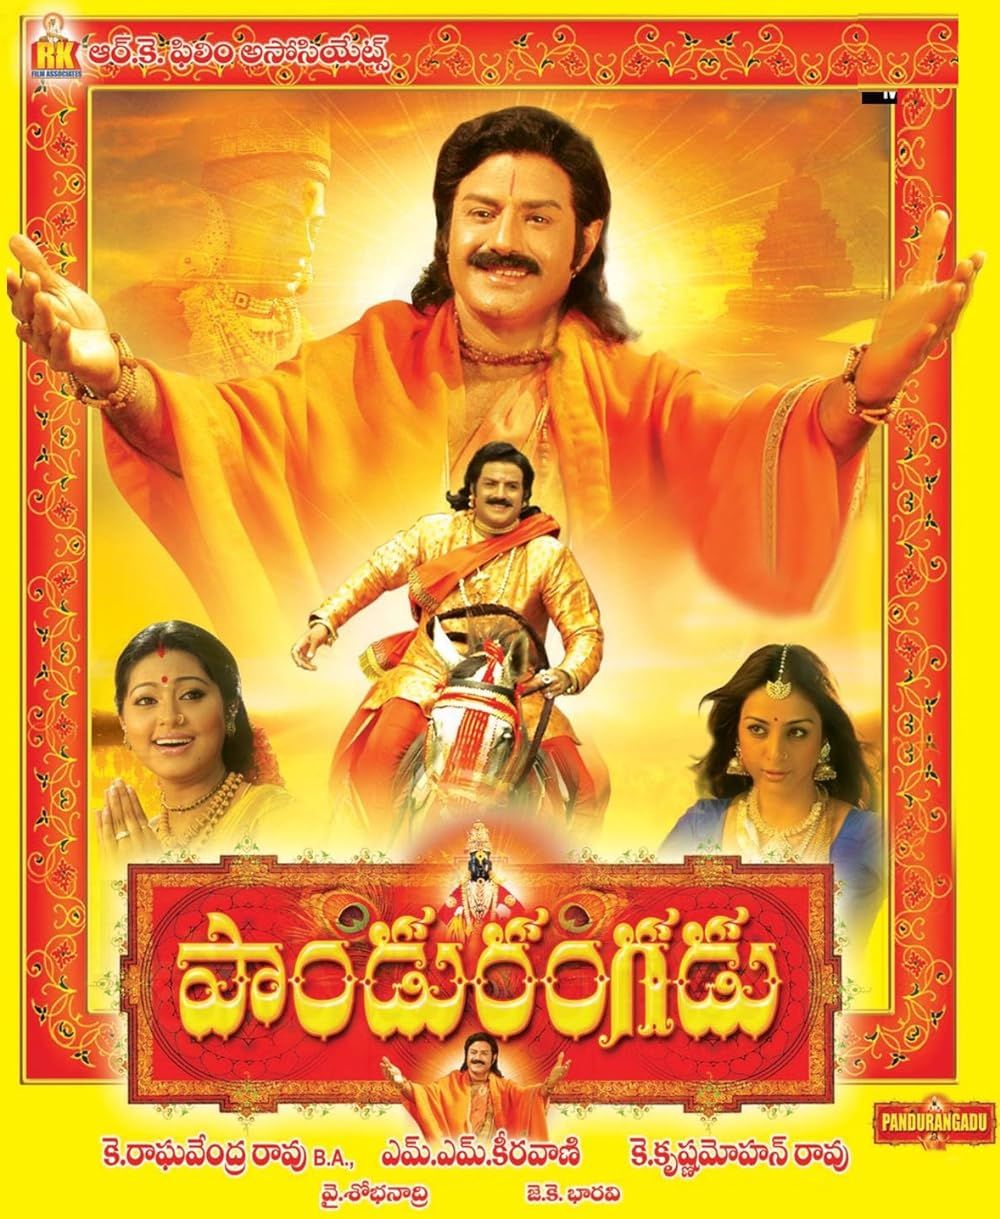 Pandurangadu (2008) Hindi ORG Dubbed Movie download full movie